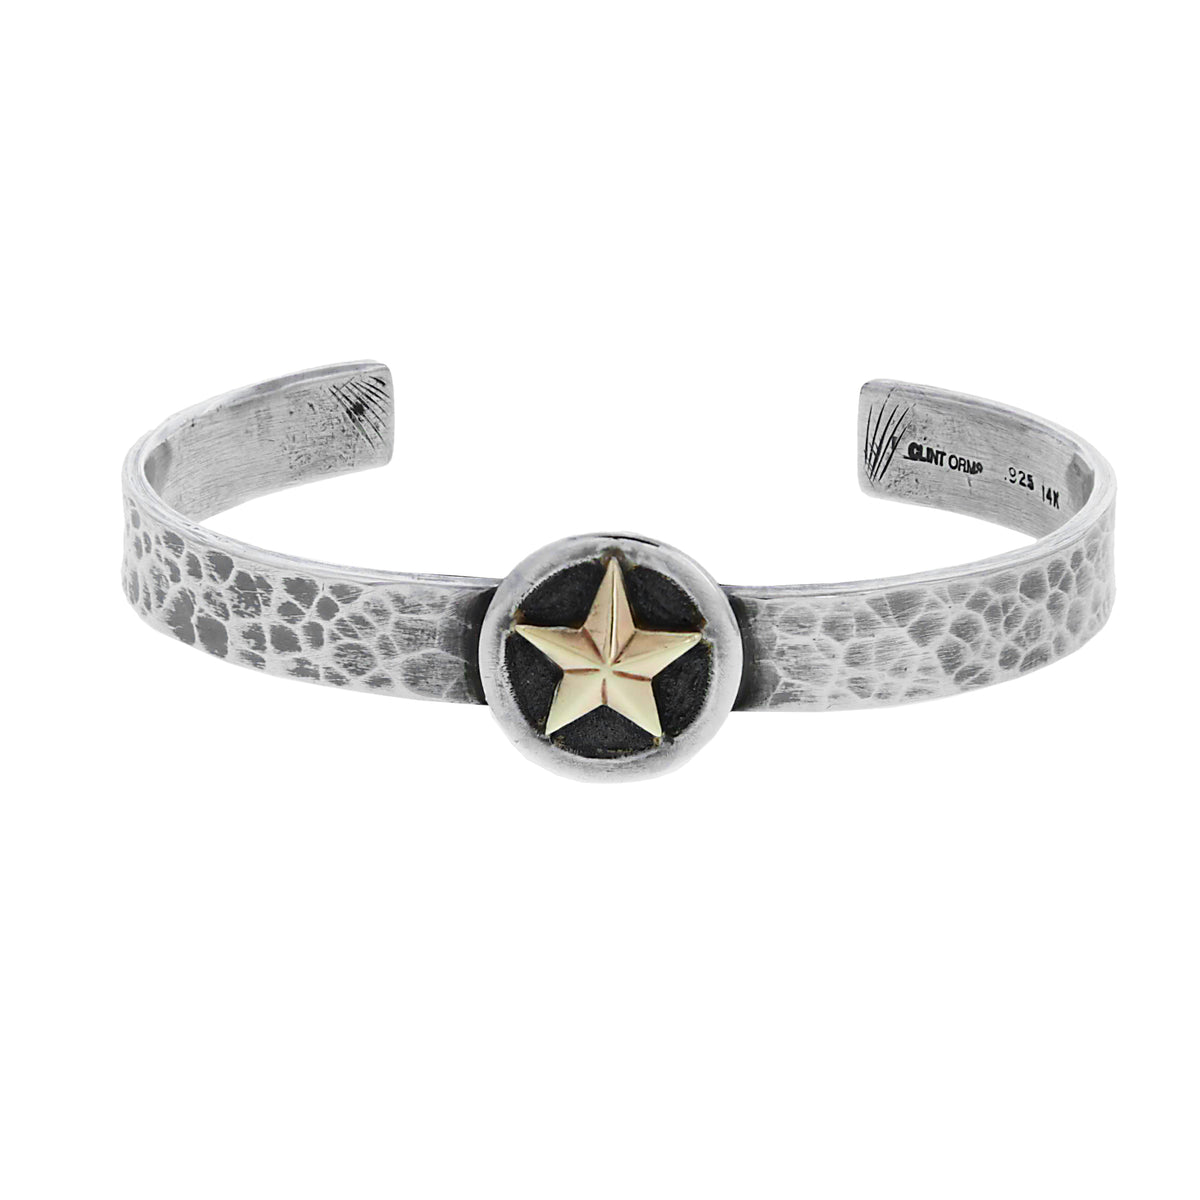 Bracelet 1408 Gold Star - Clint Orms